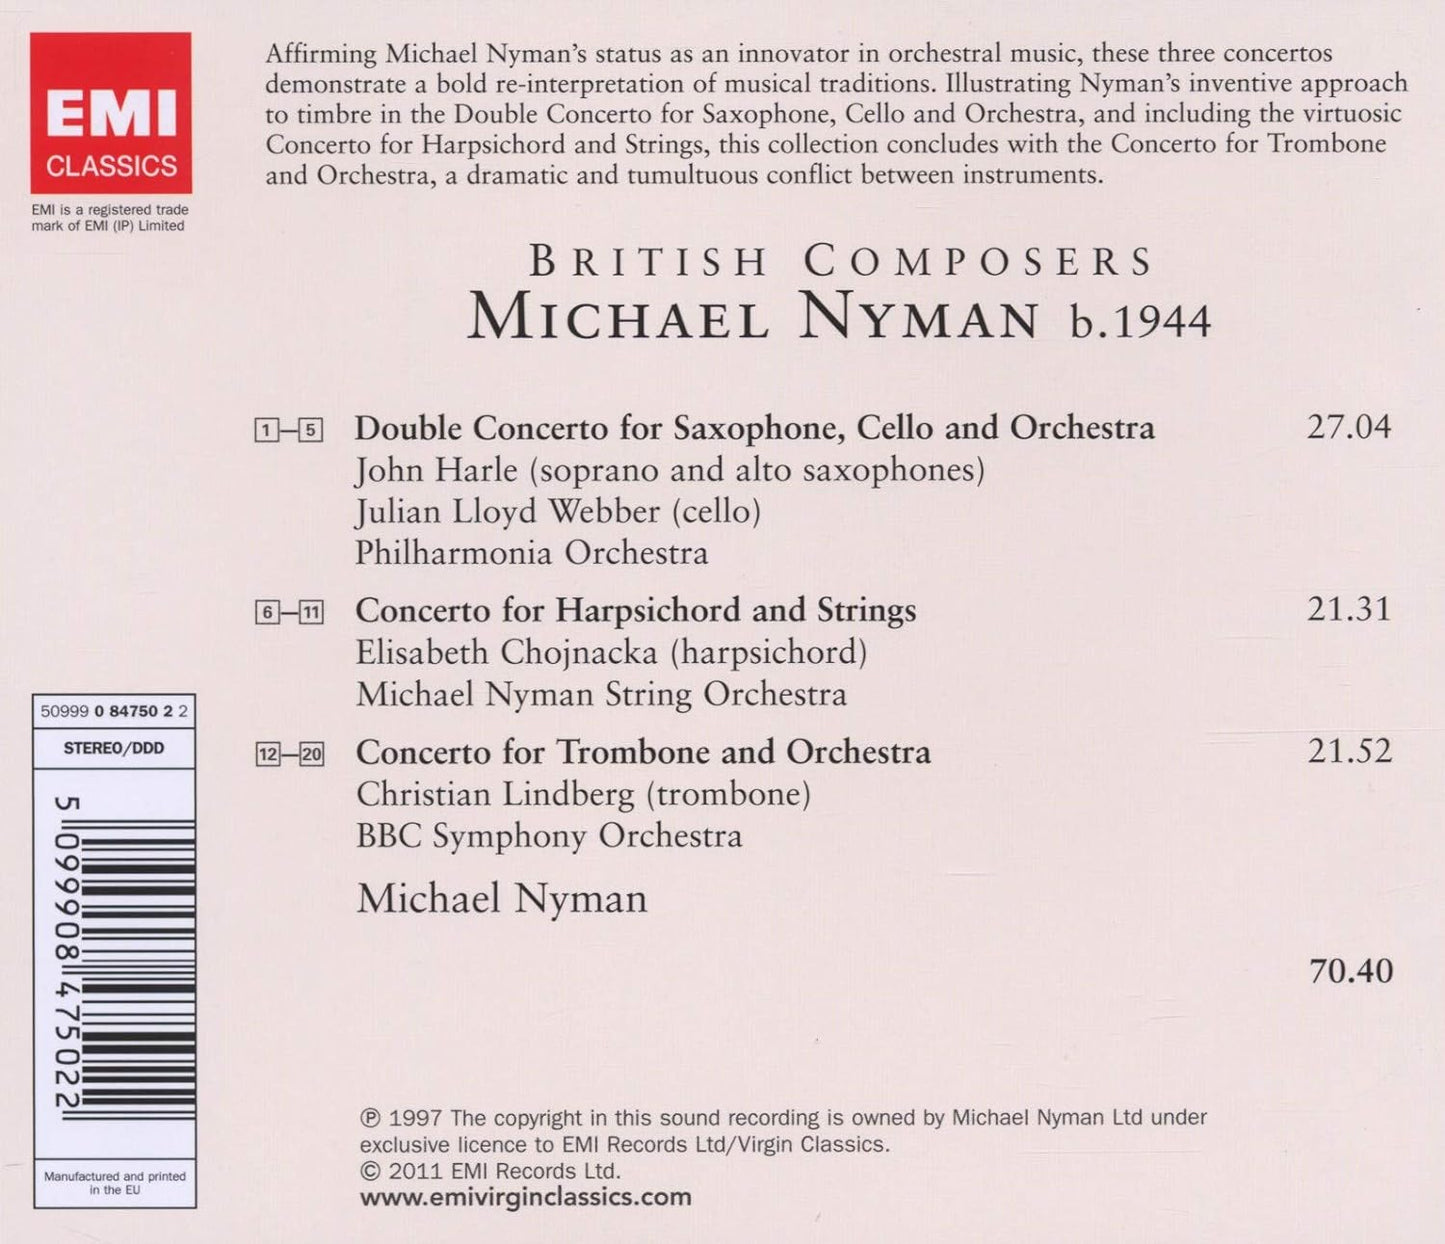 Concertos for Saxophone & Cello, Harpsichord & Trombone - Julian Lloyd Webber, John Harle, Michael Nyman